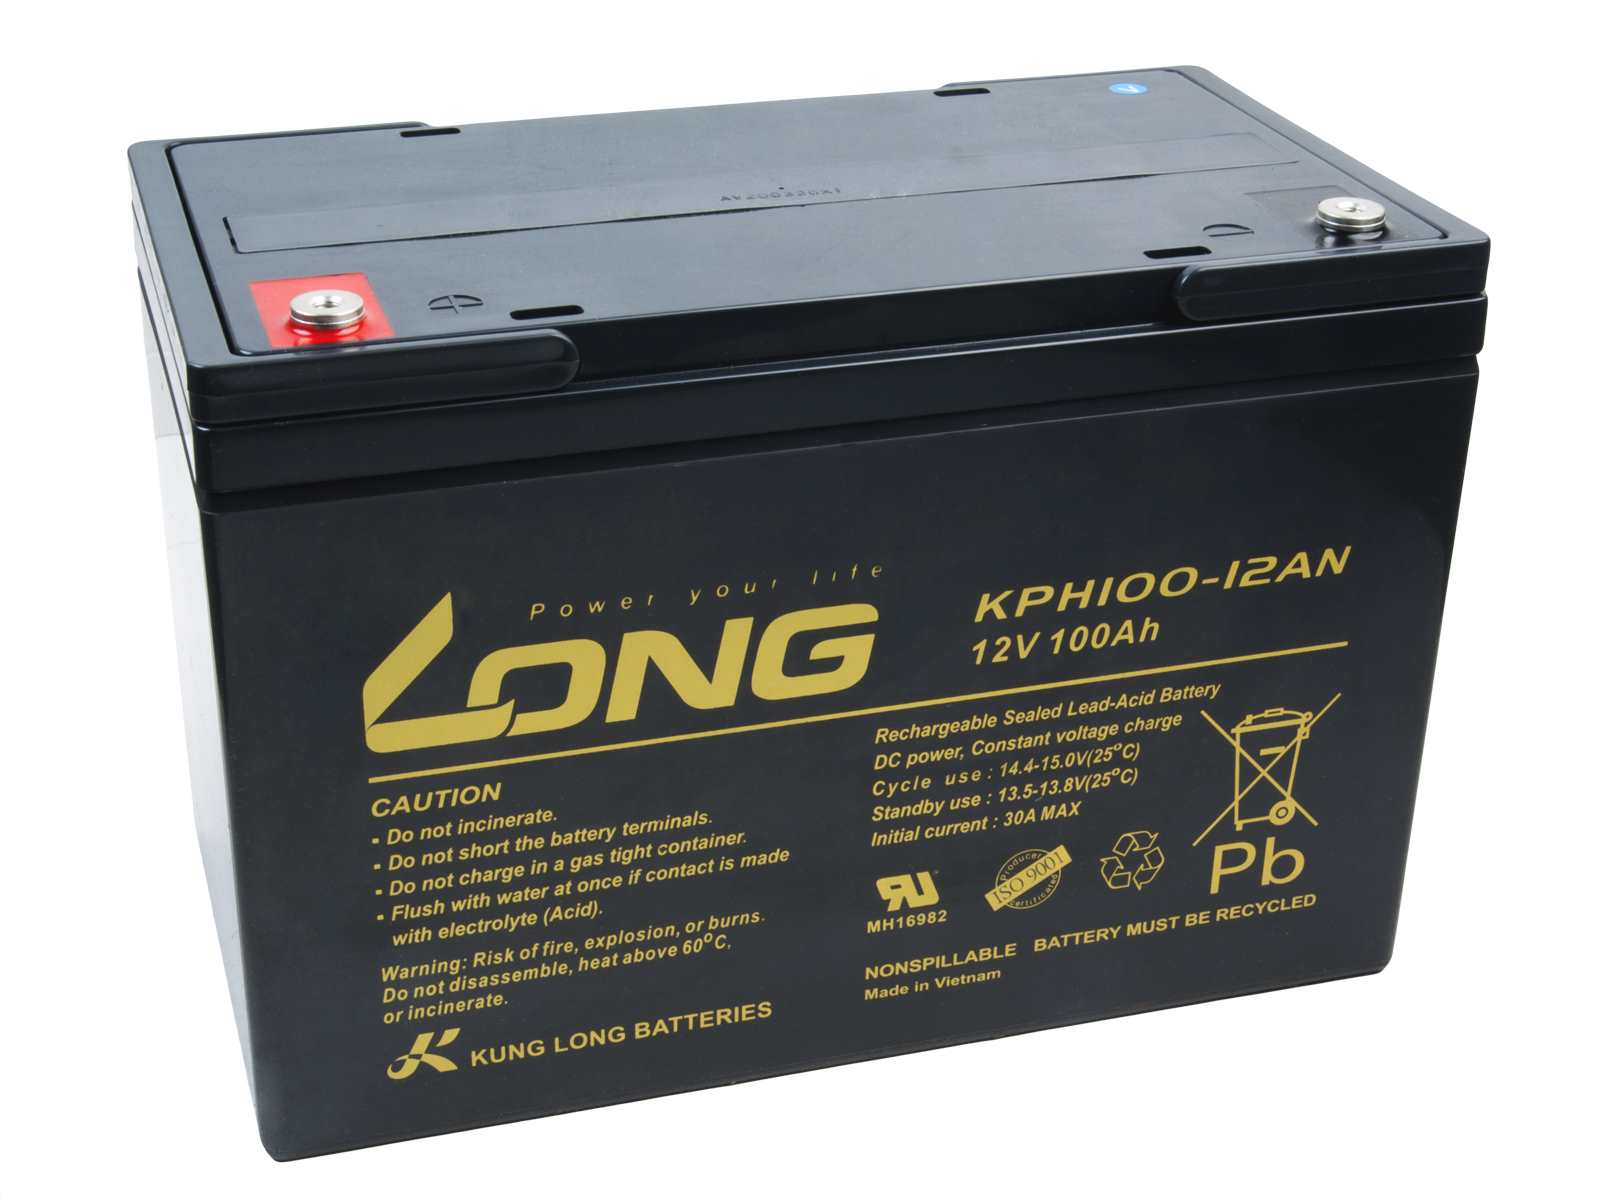 LONG baterie 12V 100Ah M6 HighRate LongLife 12 let (KPH100-12AN)0 